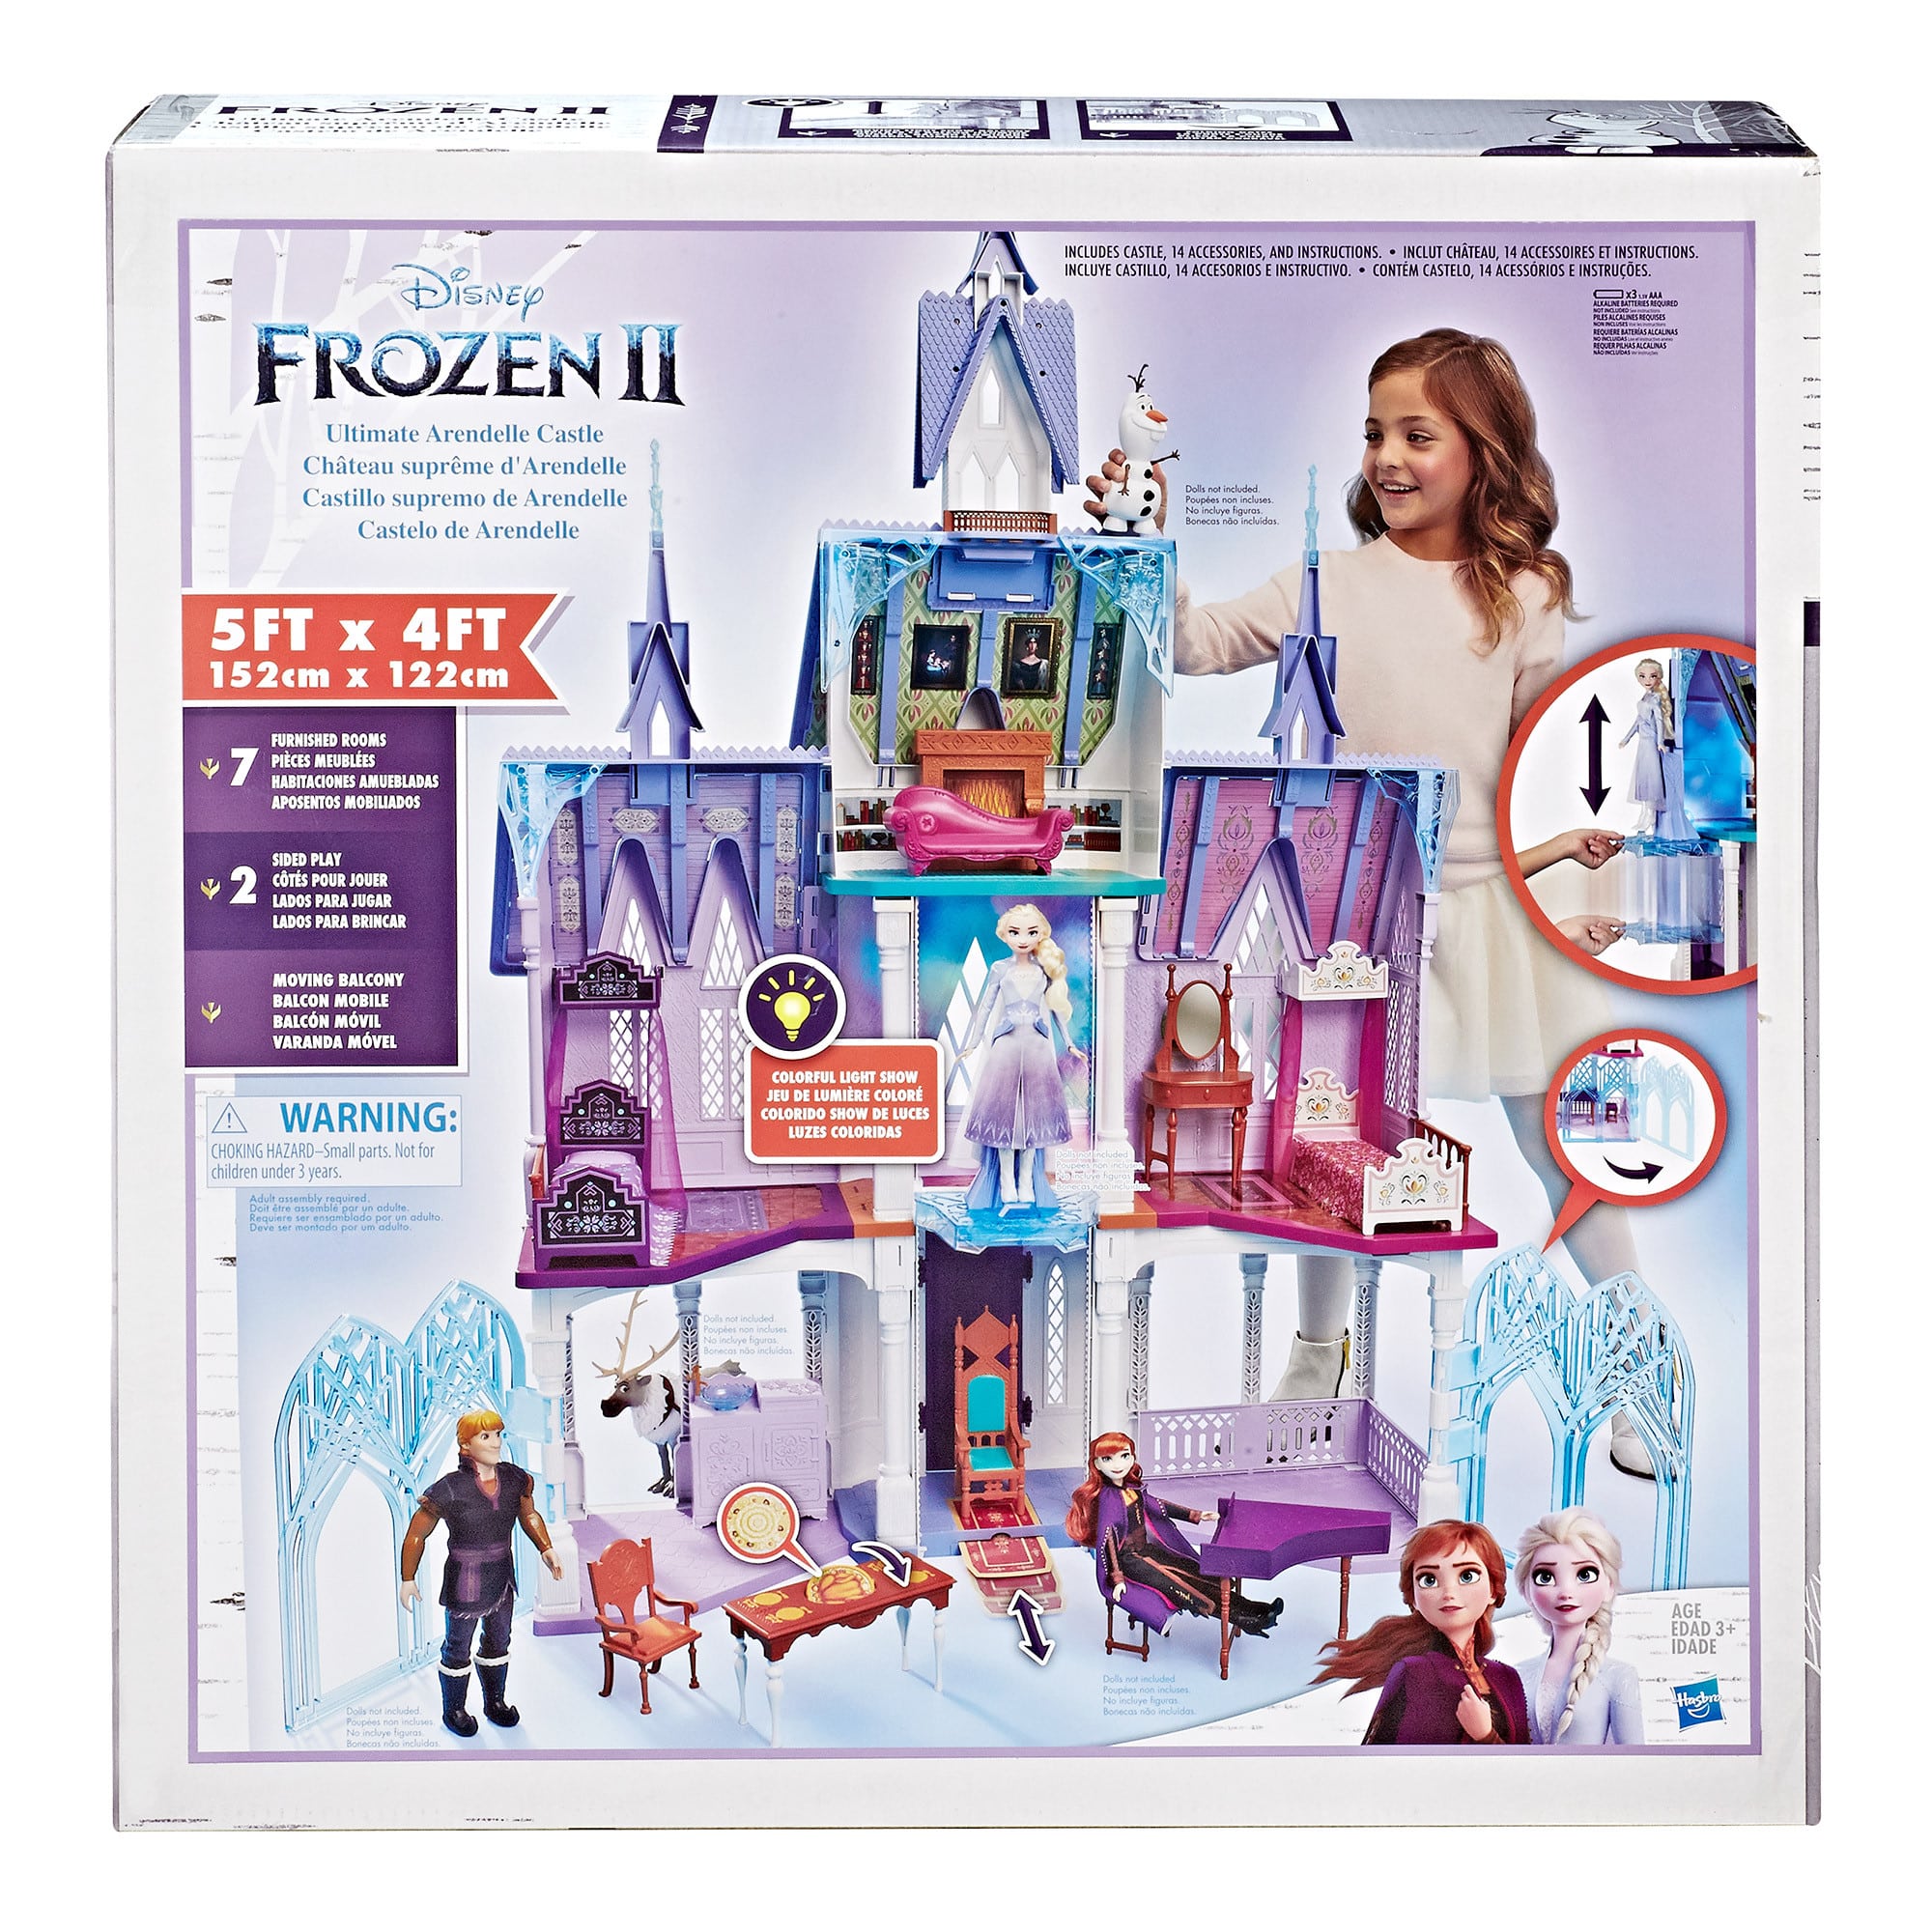 Disney Frozen 2 - Ultimate Arendelle Castle